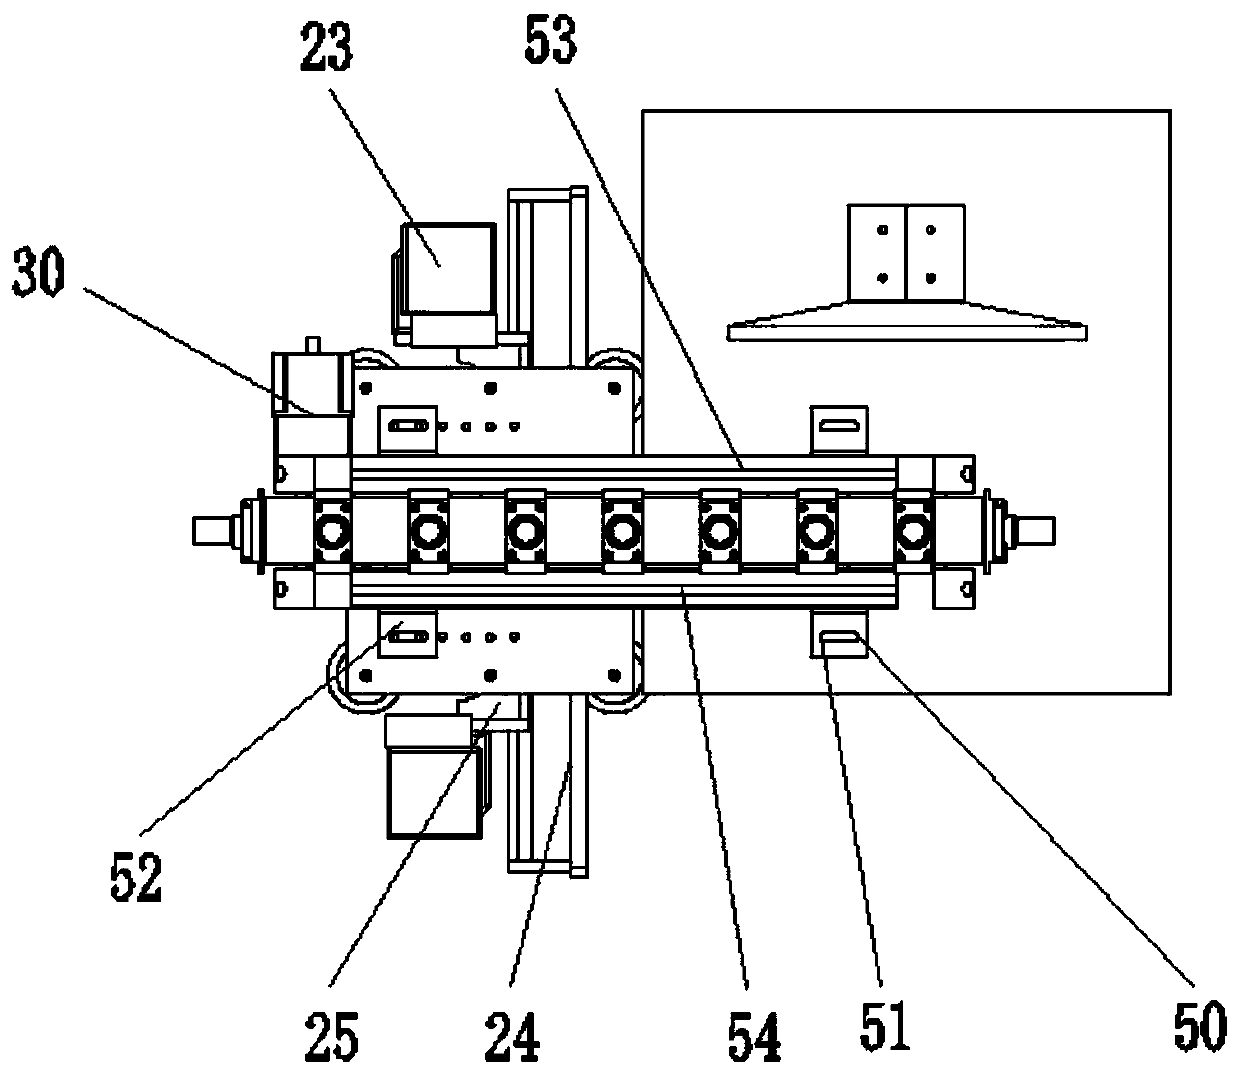 Laser printing device